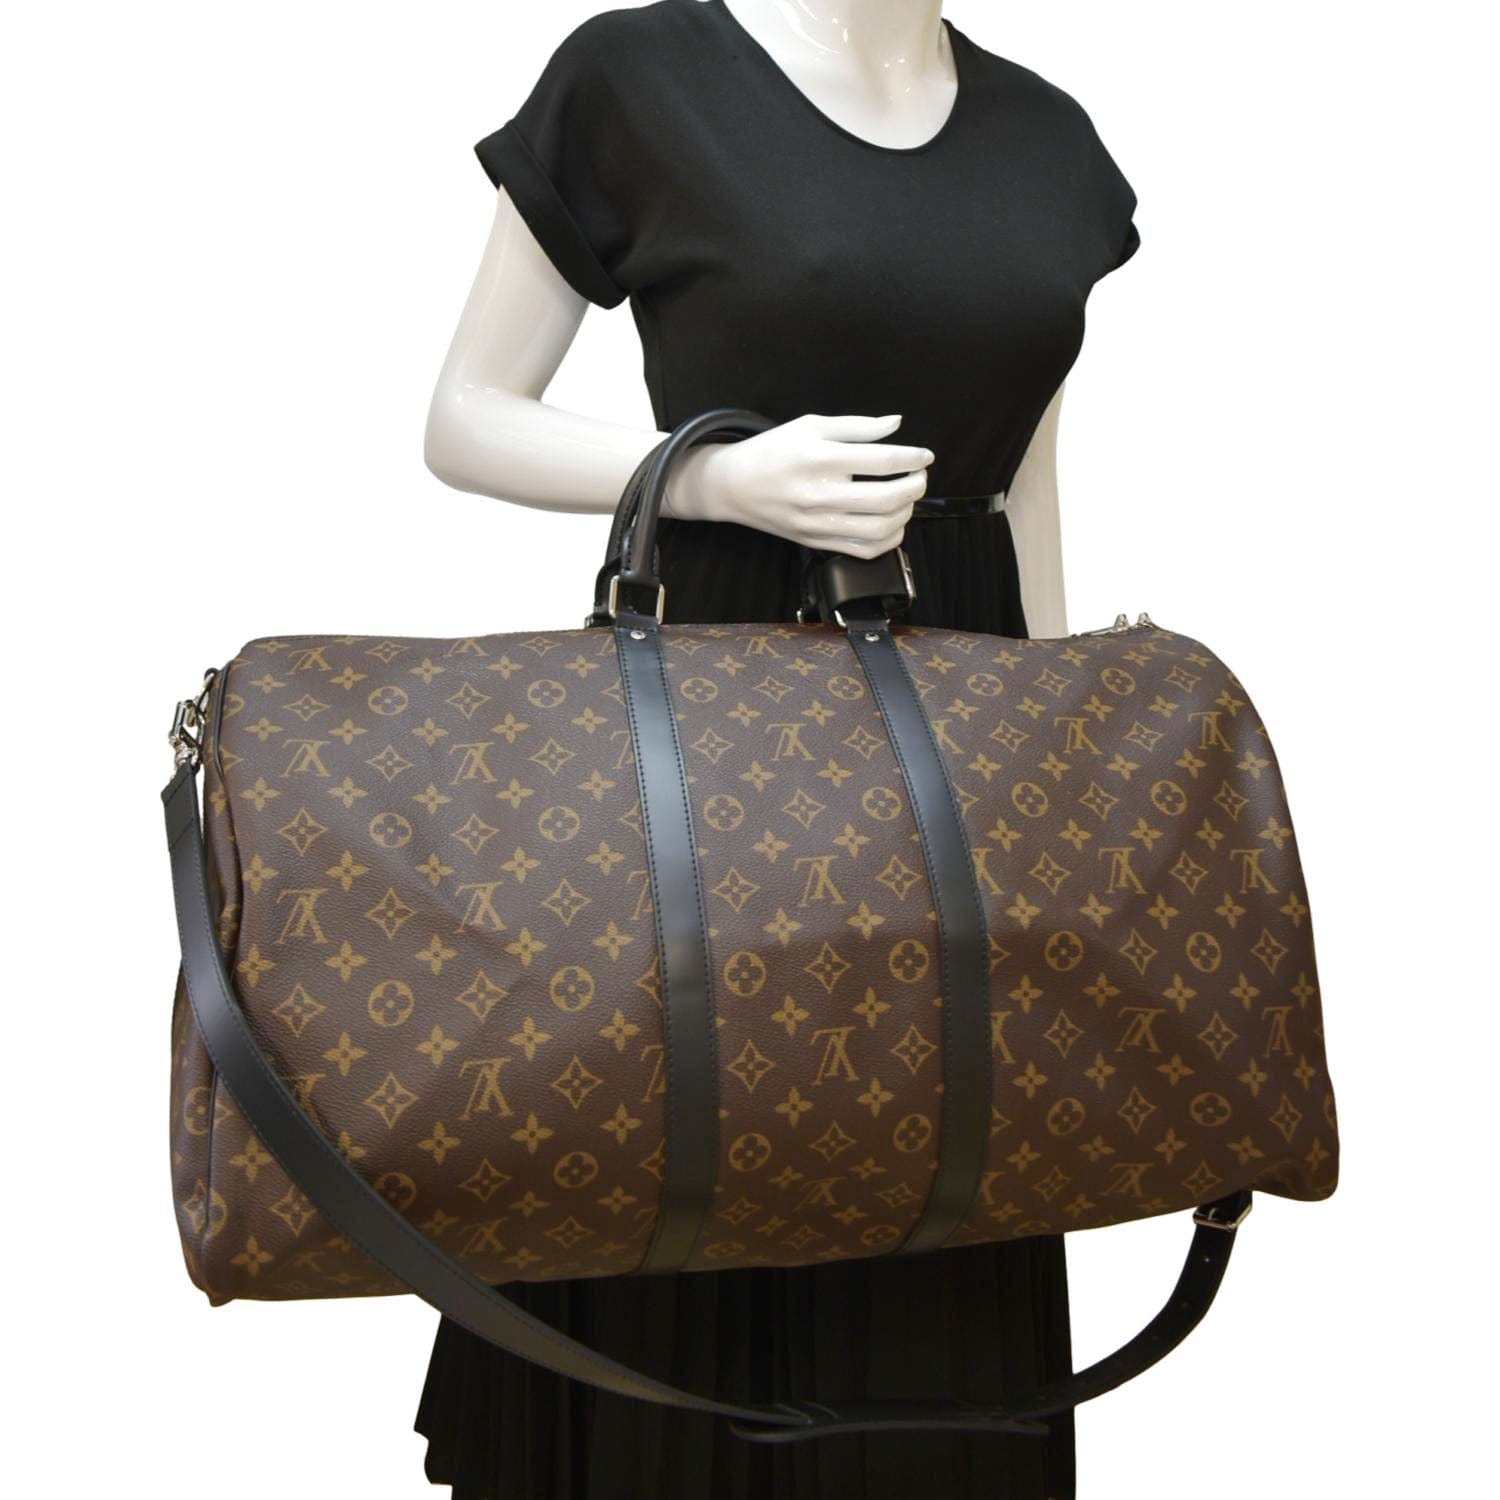 Louis Vuitton Keepall 55 Monogram Canvas Travel Bag